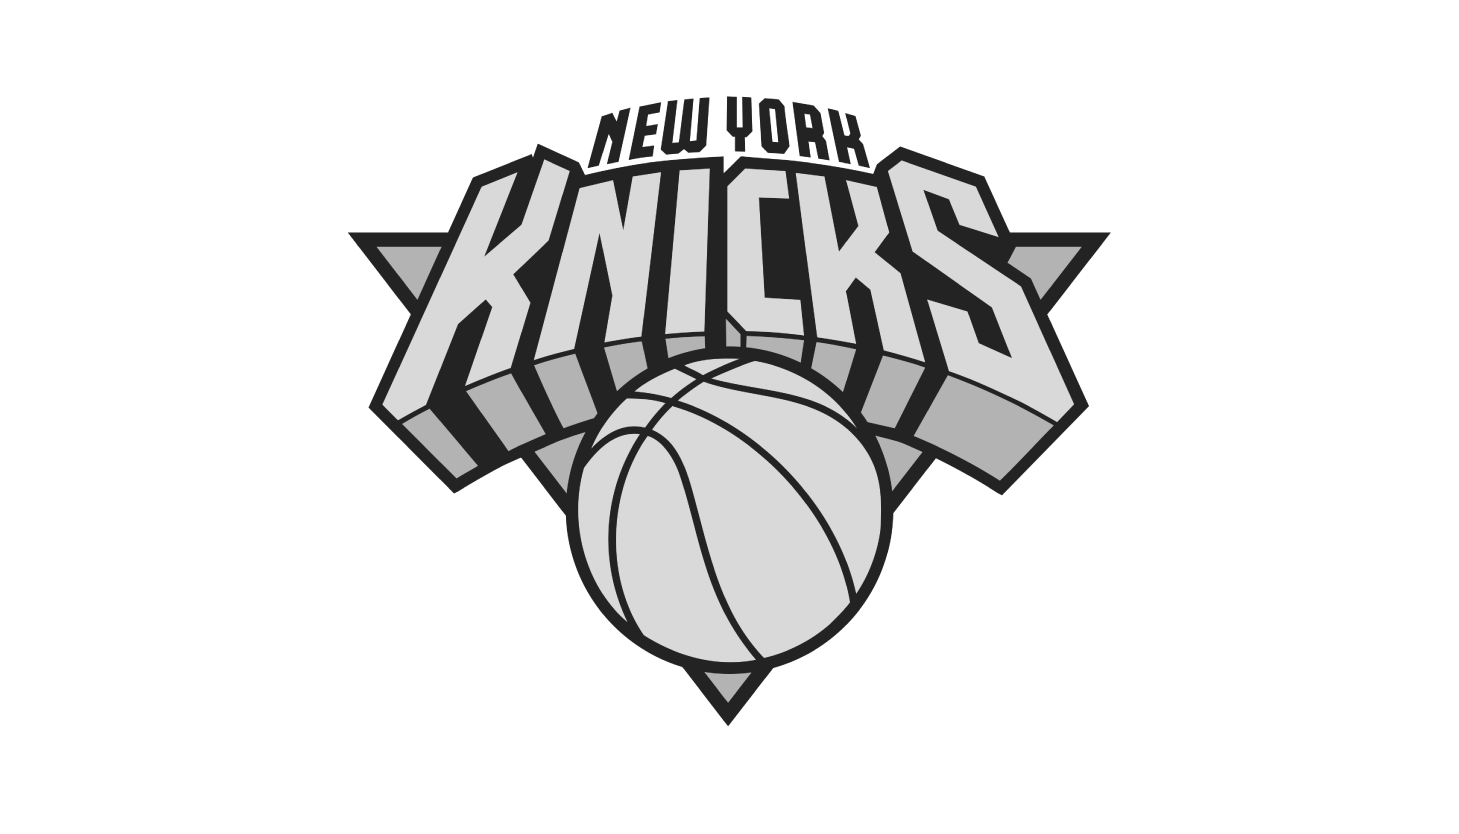 Website Logos_Knicks.png